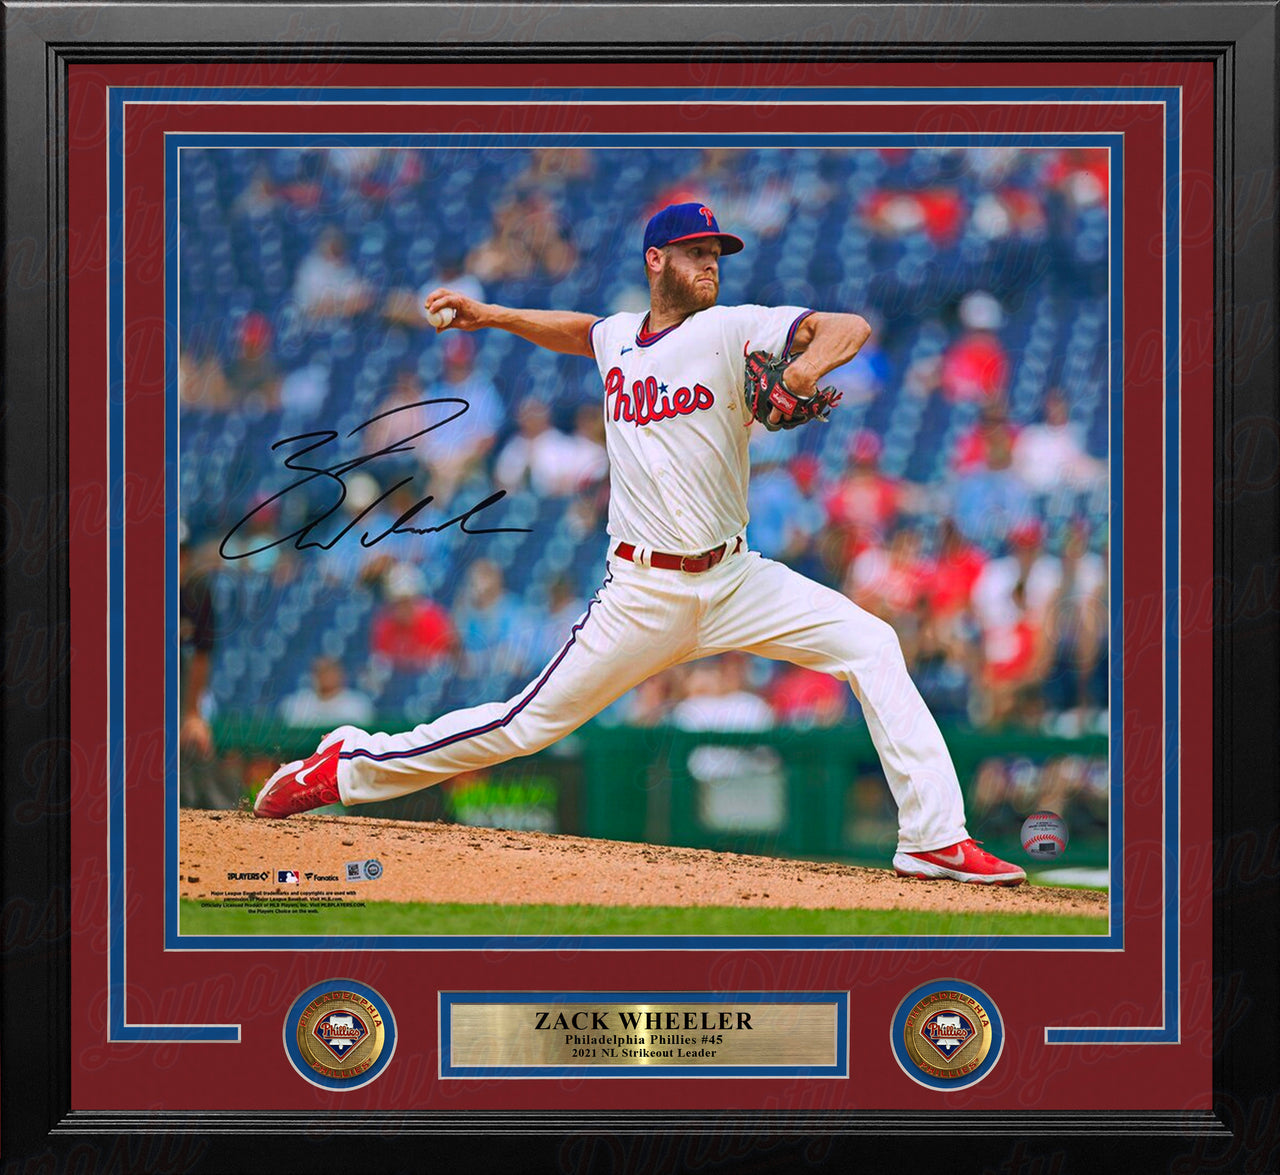 Zack Wheeler in Action Autographed Philadelphia Phillies 16" x 20" Framed Baseball Photo - Dynasty Sports & Framing 